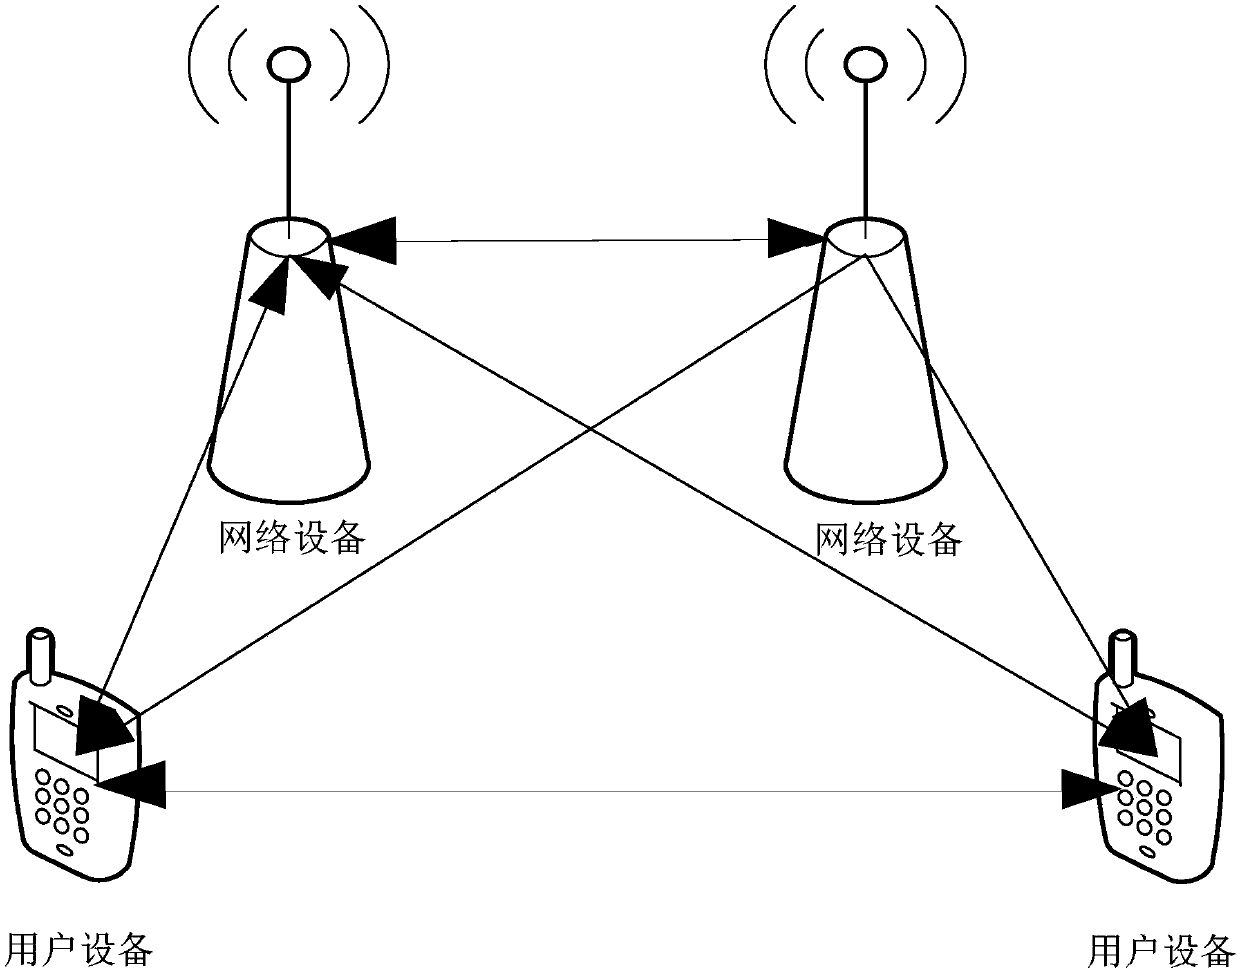 Information transmission method, initiating node and response node